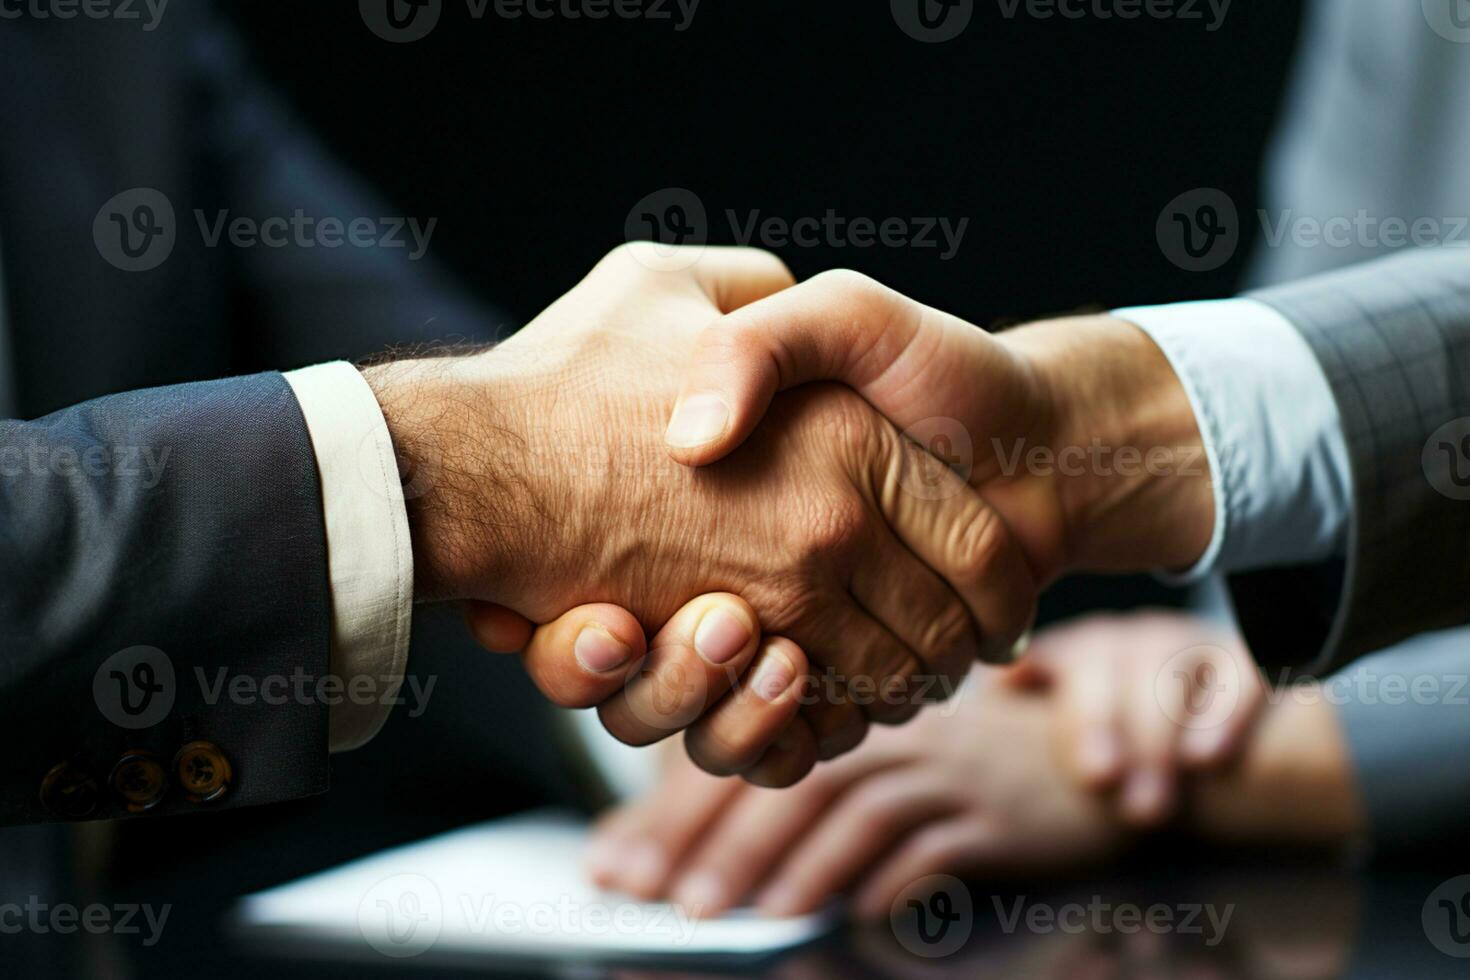 Tight grip Executives handshake, epitomizing shared goals and professional alliance AI Generated photo